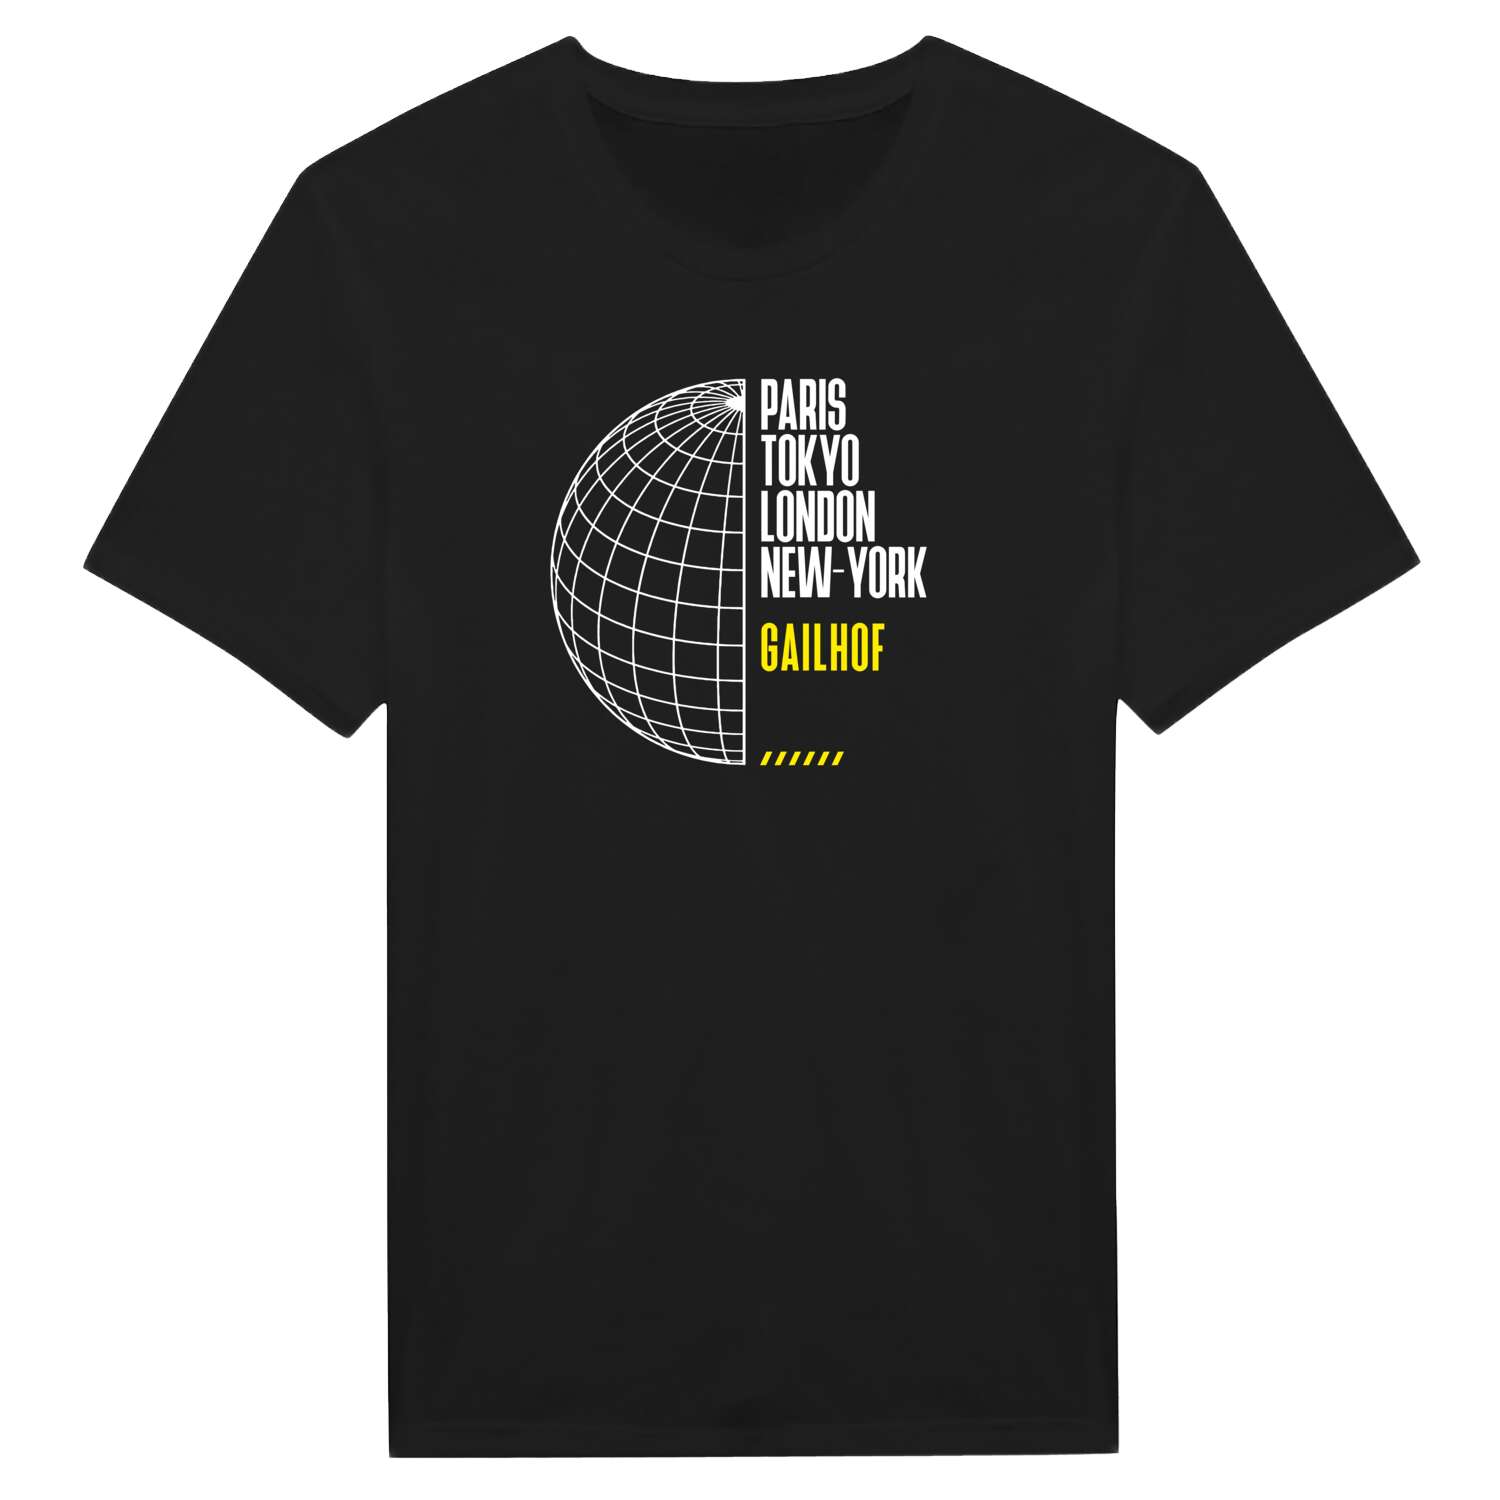 Gailhof T-Shirt »Paris Tokyo London«